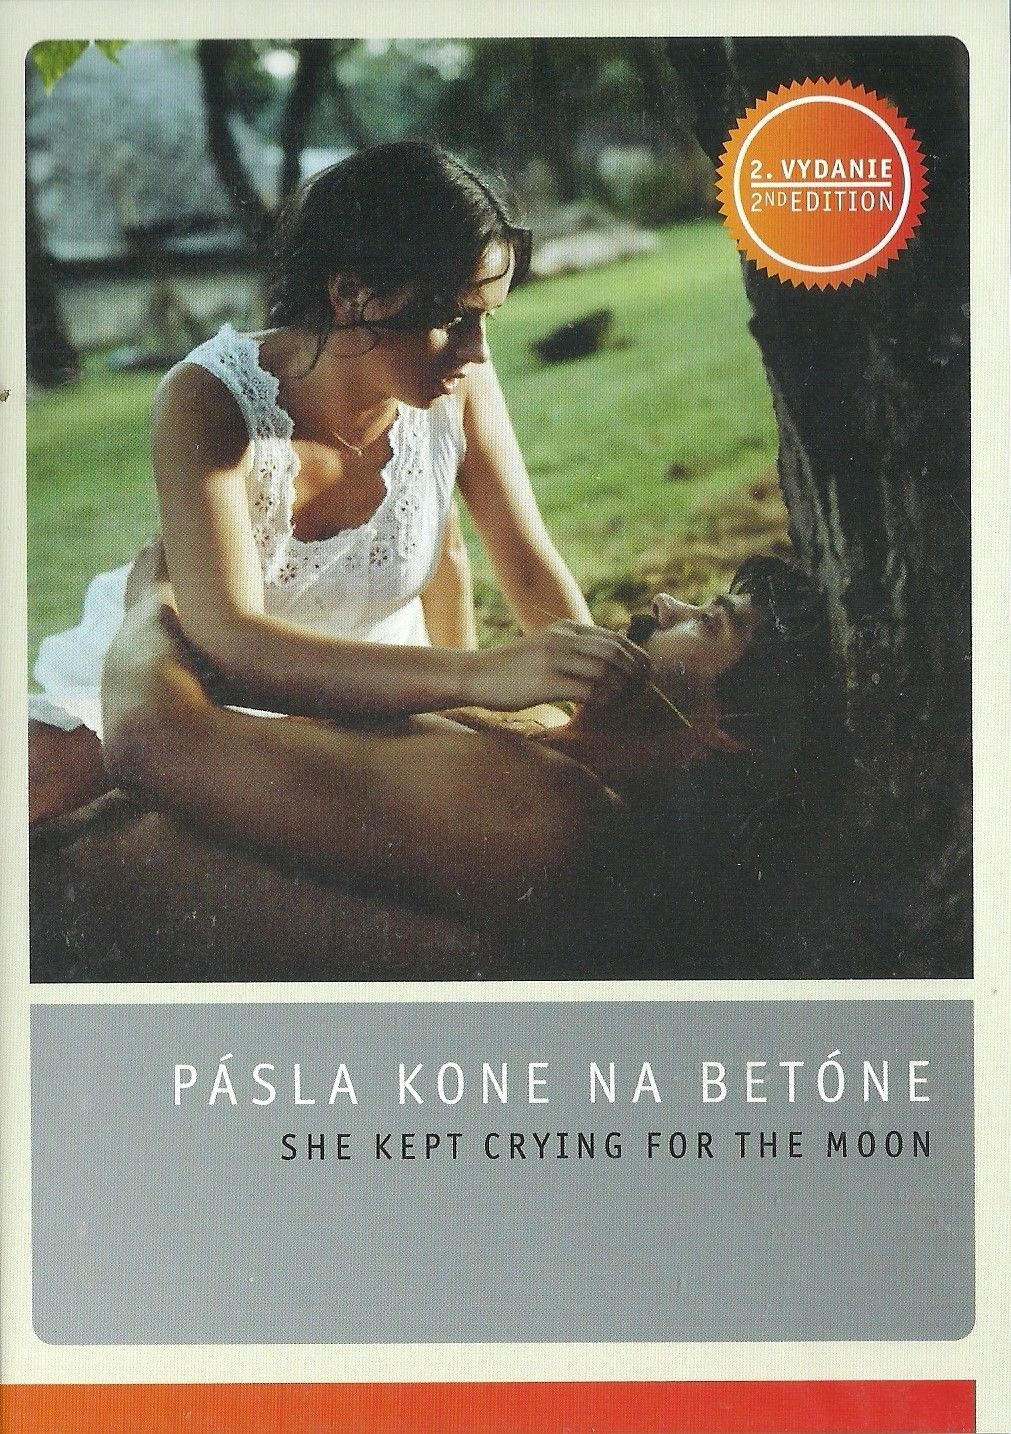 She Kept Crying for the Moon / Pasla kone na betone